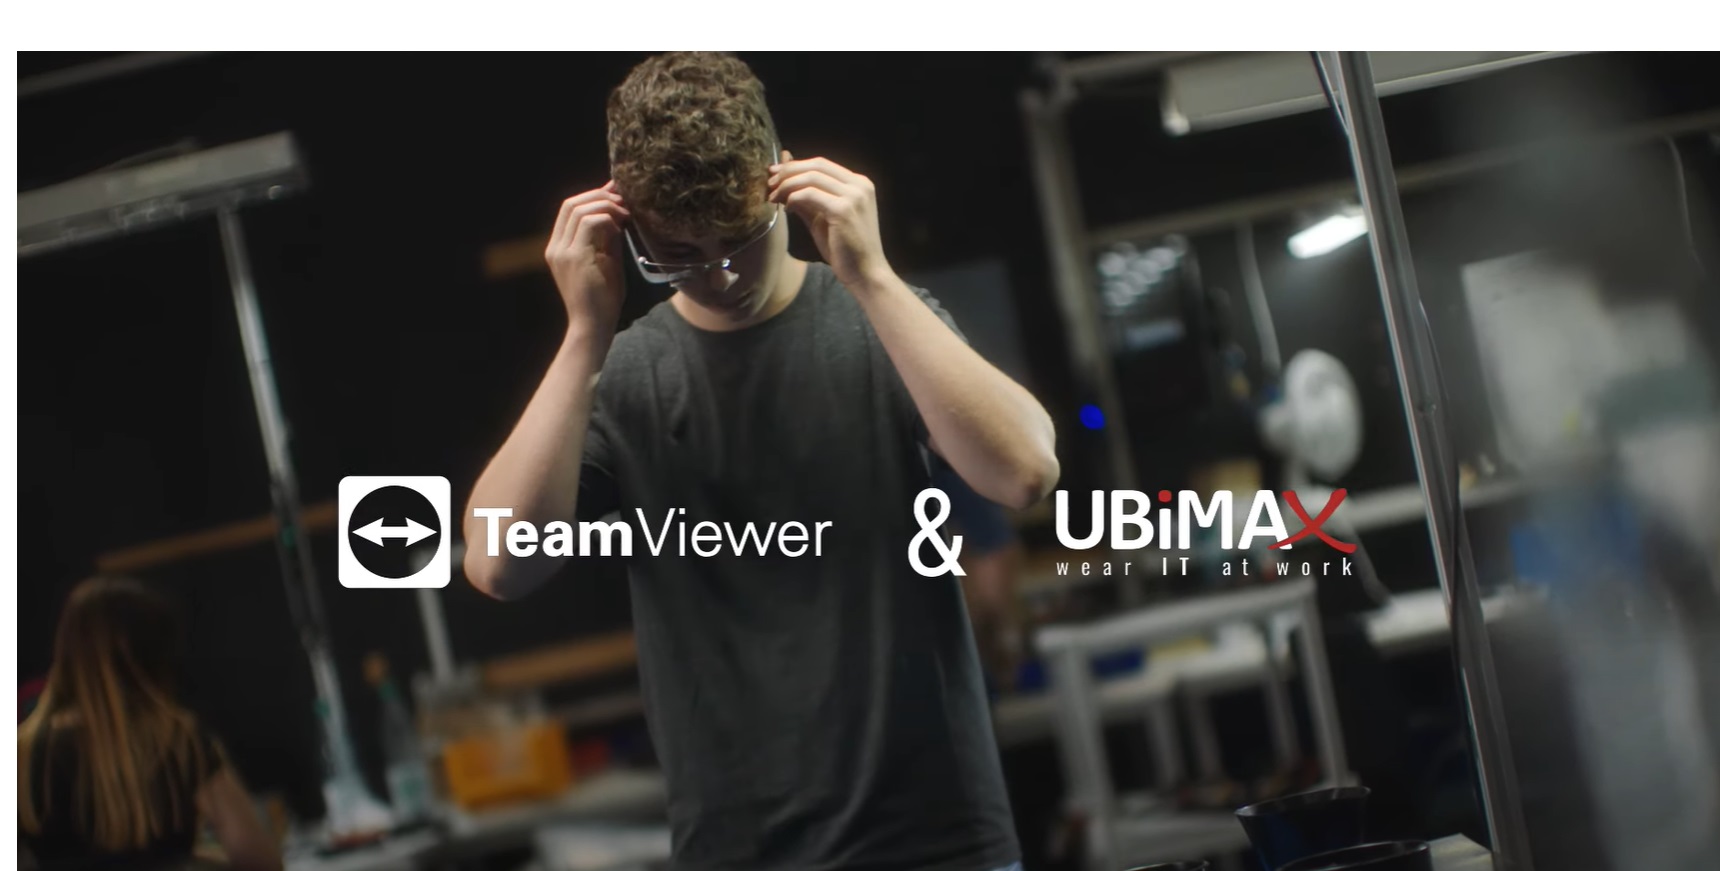 TeamViewer ,gafas, ar, wearables, Ubimax, programapublicidad